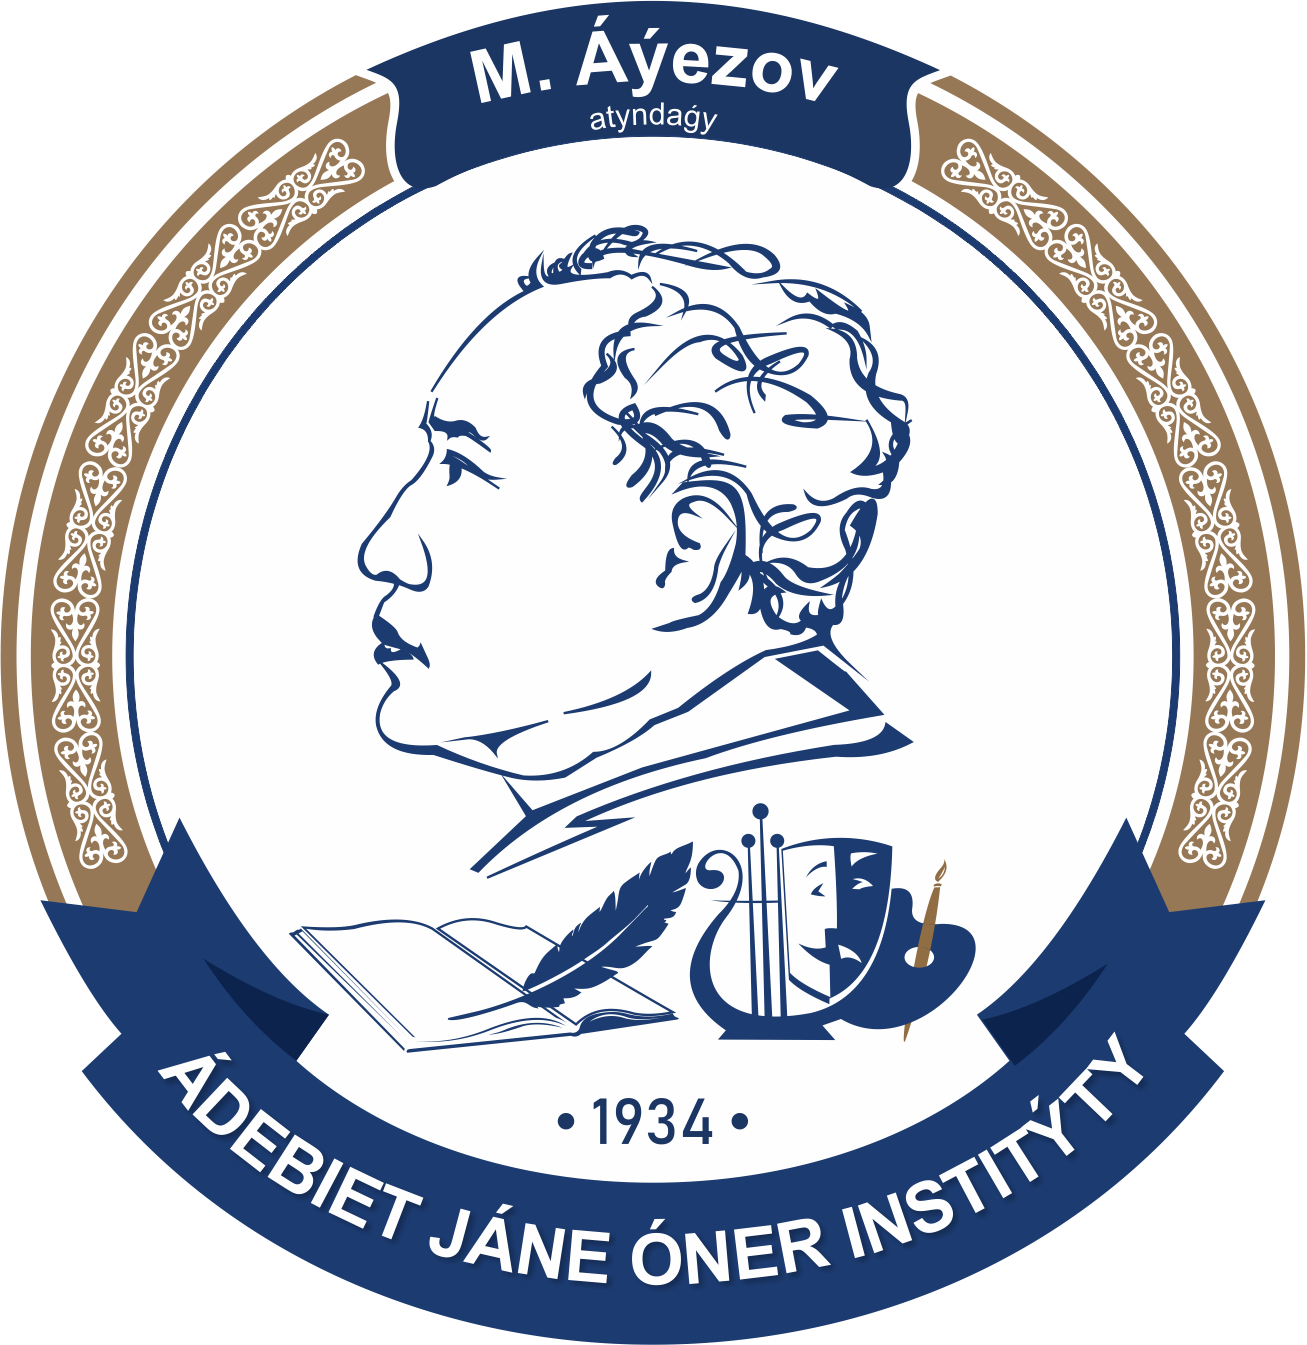 INSTITUTE OF LITERATURE AND ART NAMED FOR M. AUEZOV